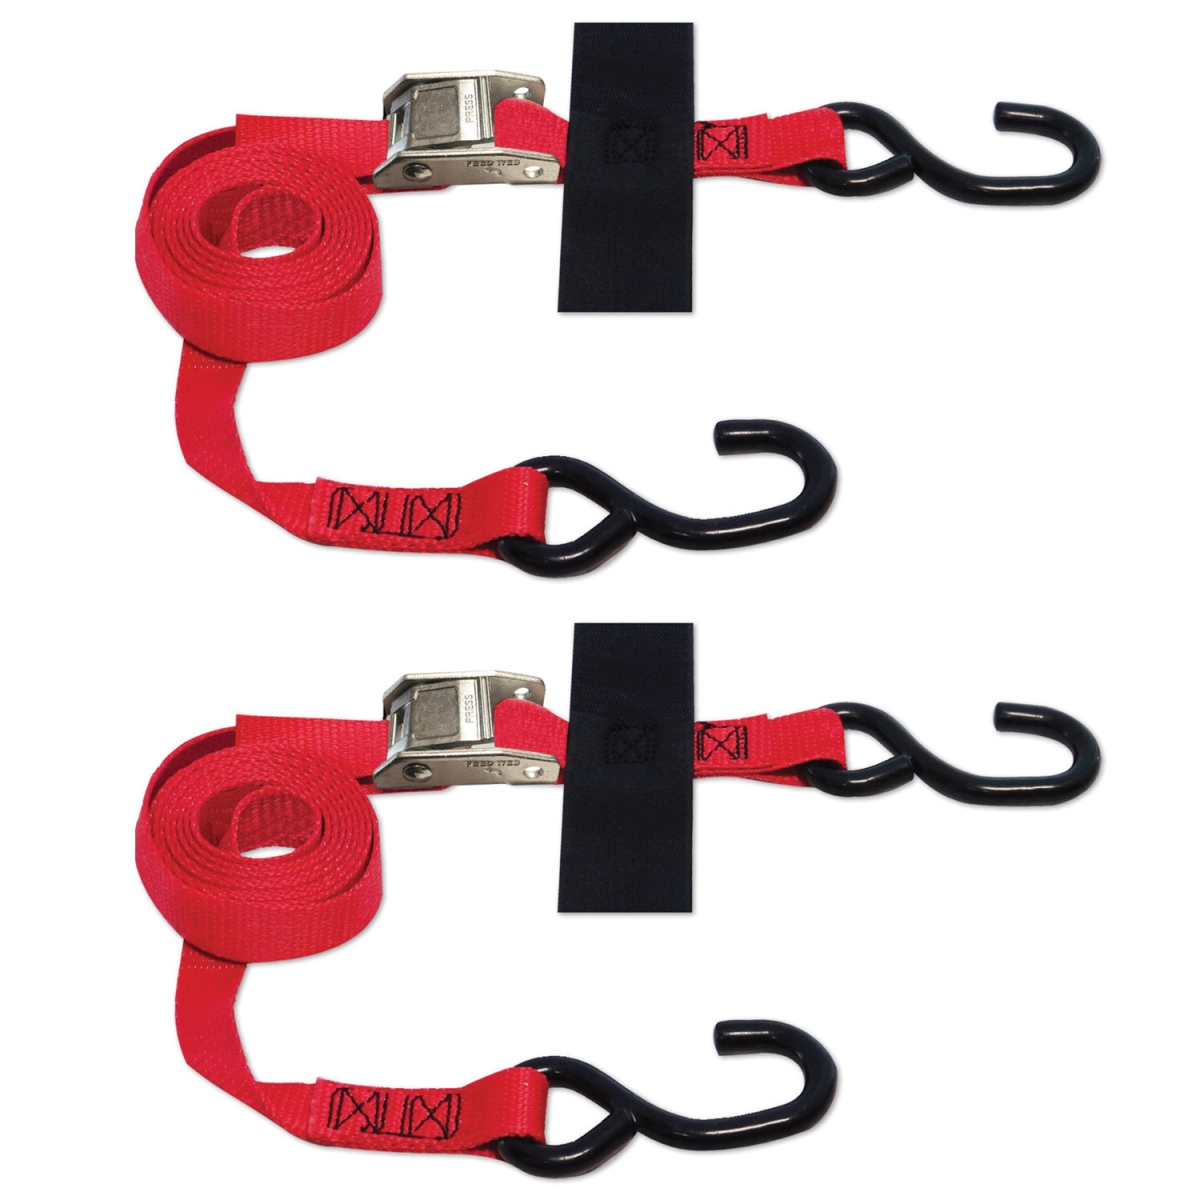 Slths108cr2 1 In. X 8 Ft. S-hook Cam Strap With Hook & Loop Storage Fastener - Pack Of 2